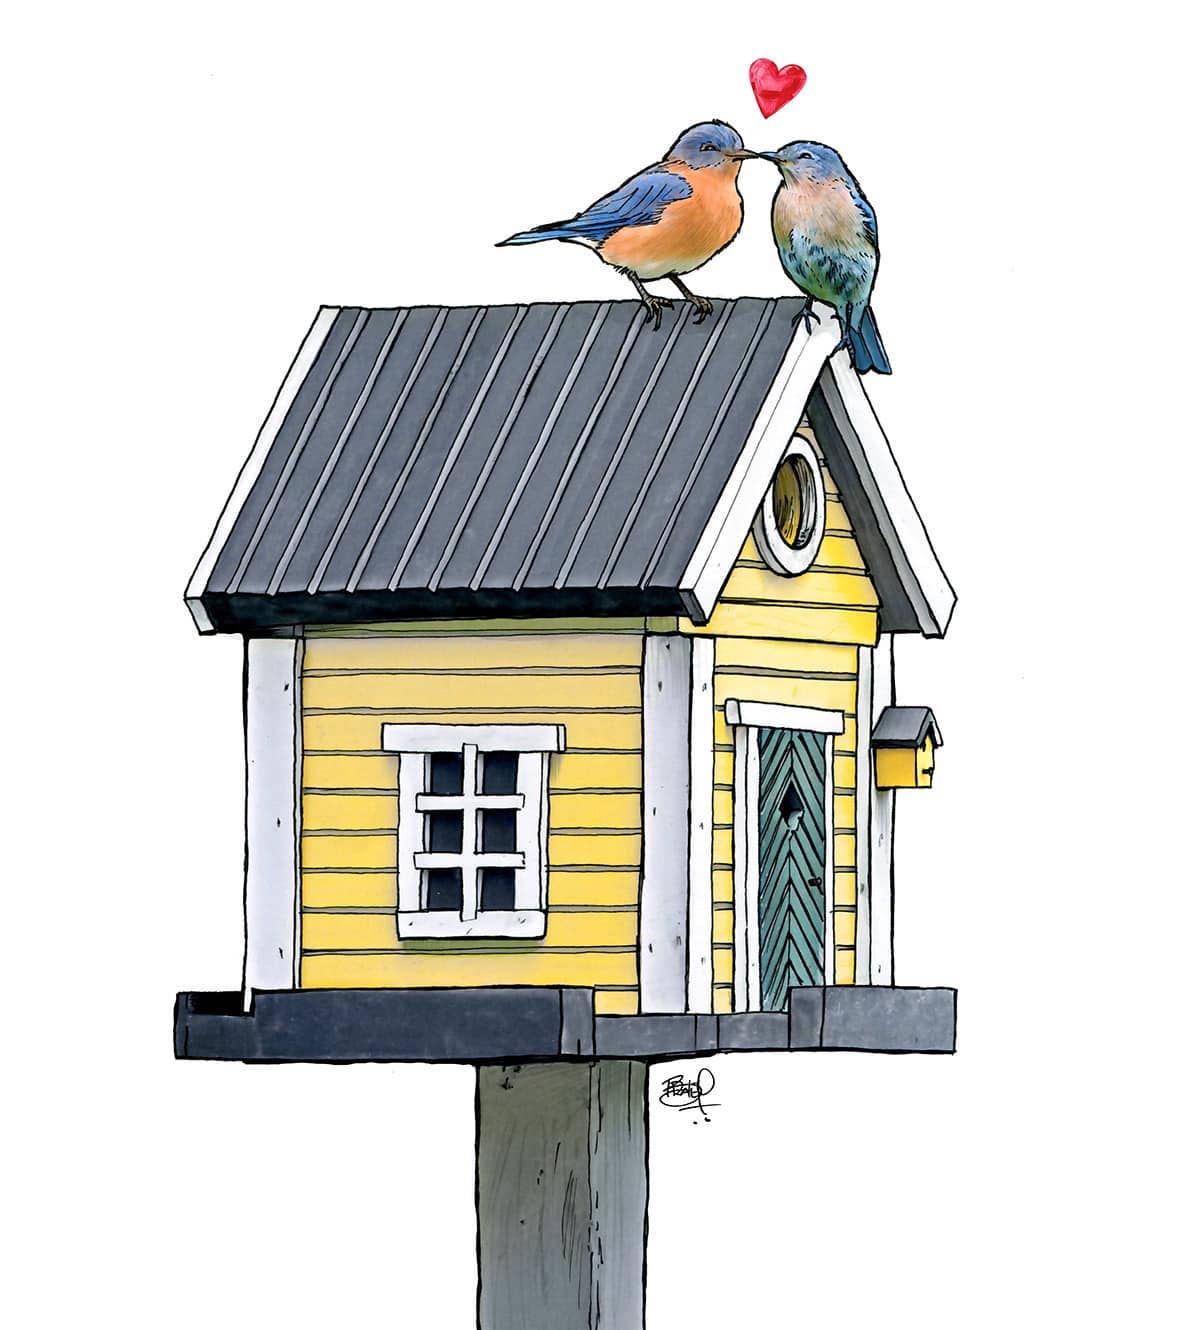 Love Birds Greeting Card (blank inside) by Shawn Braley Illustration